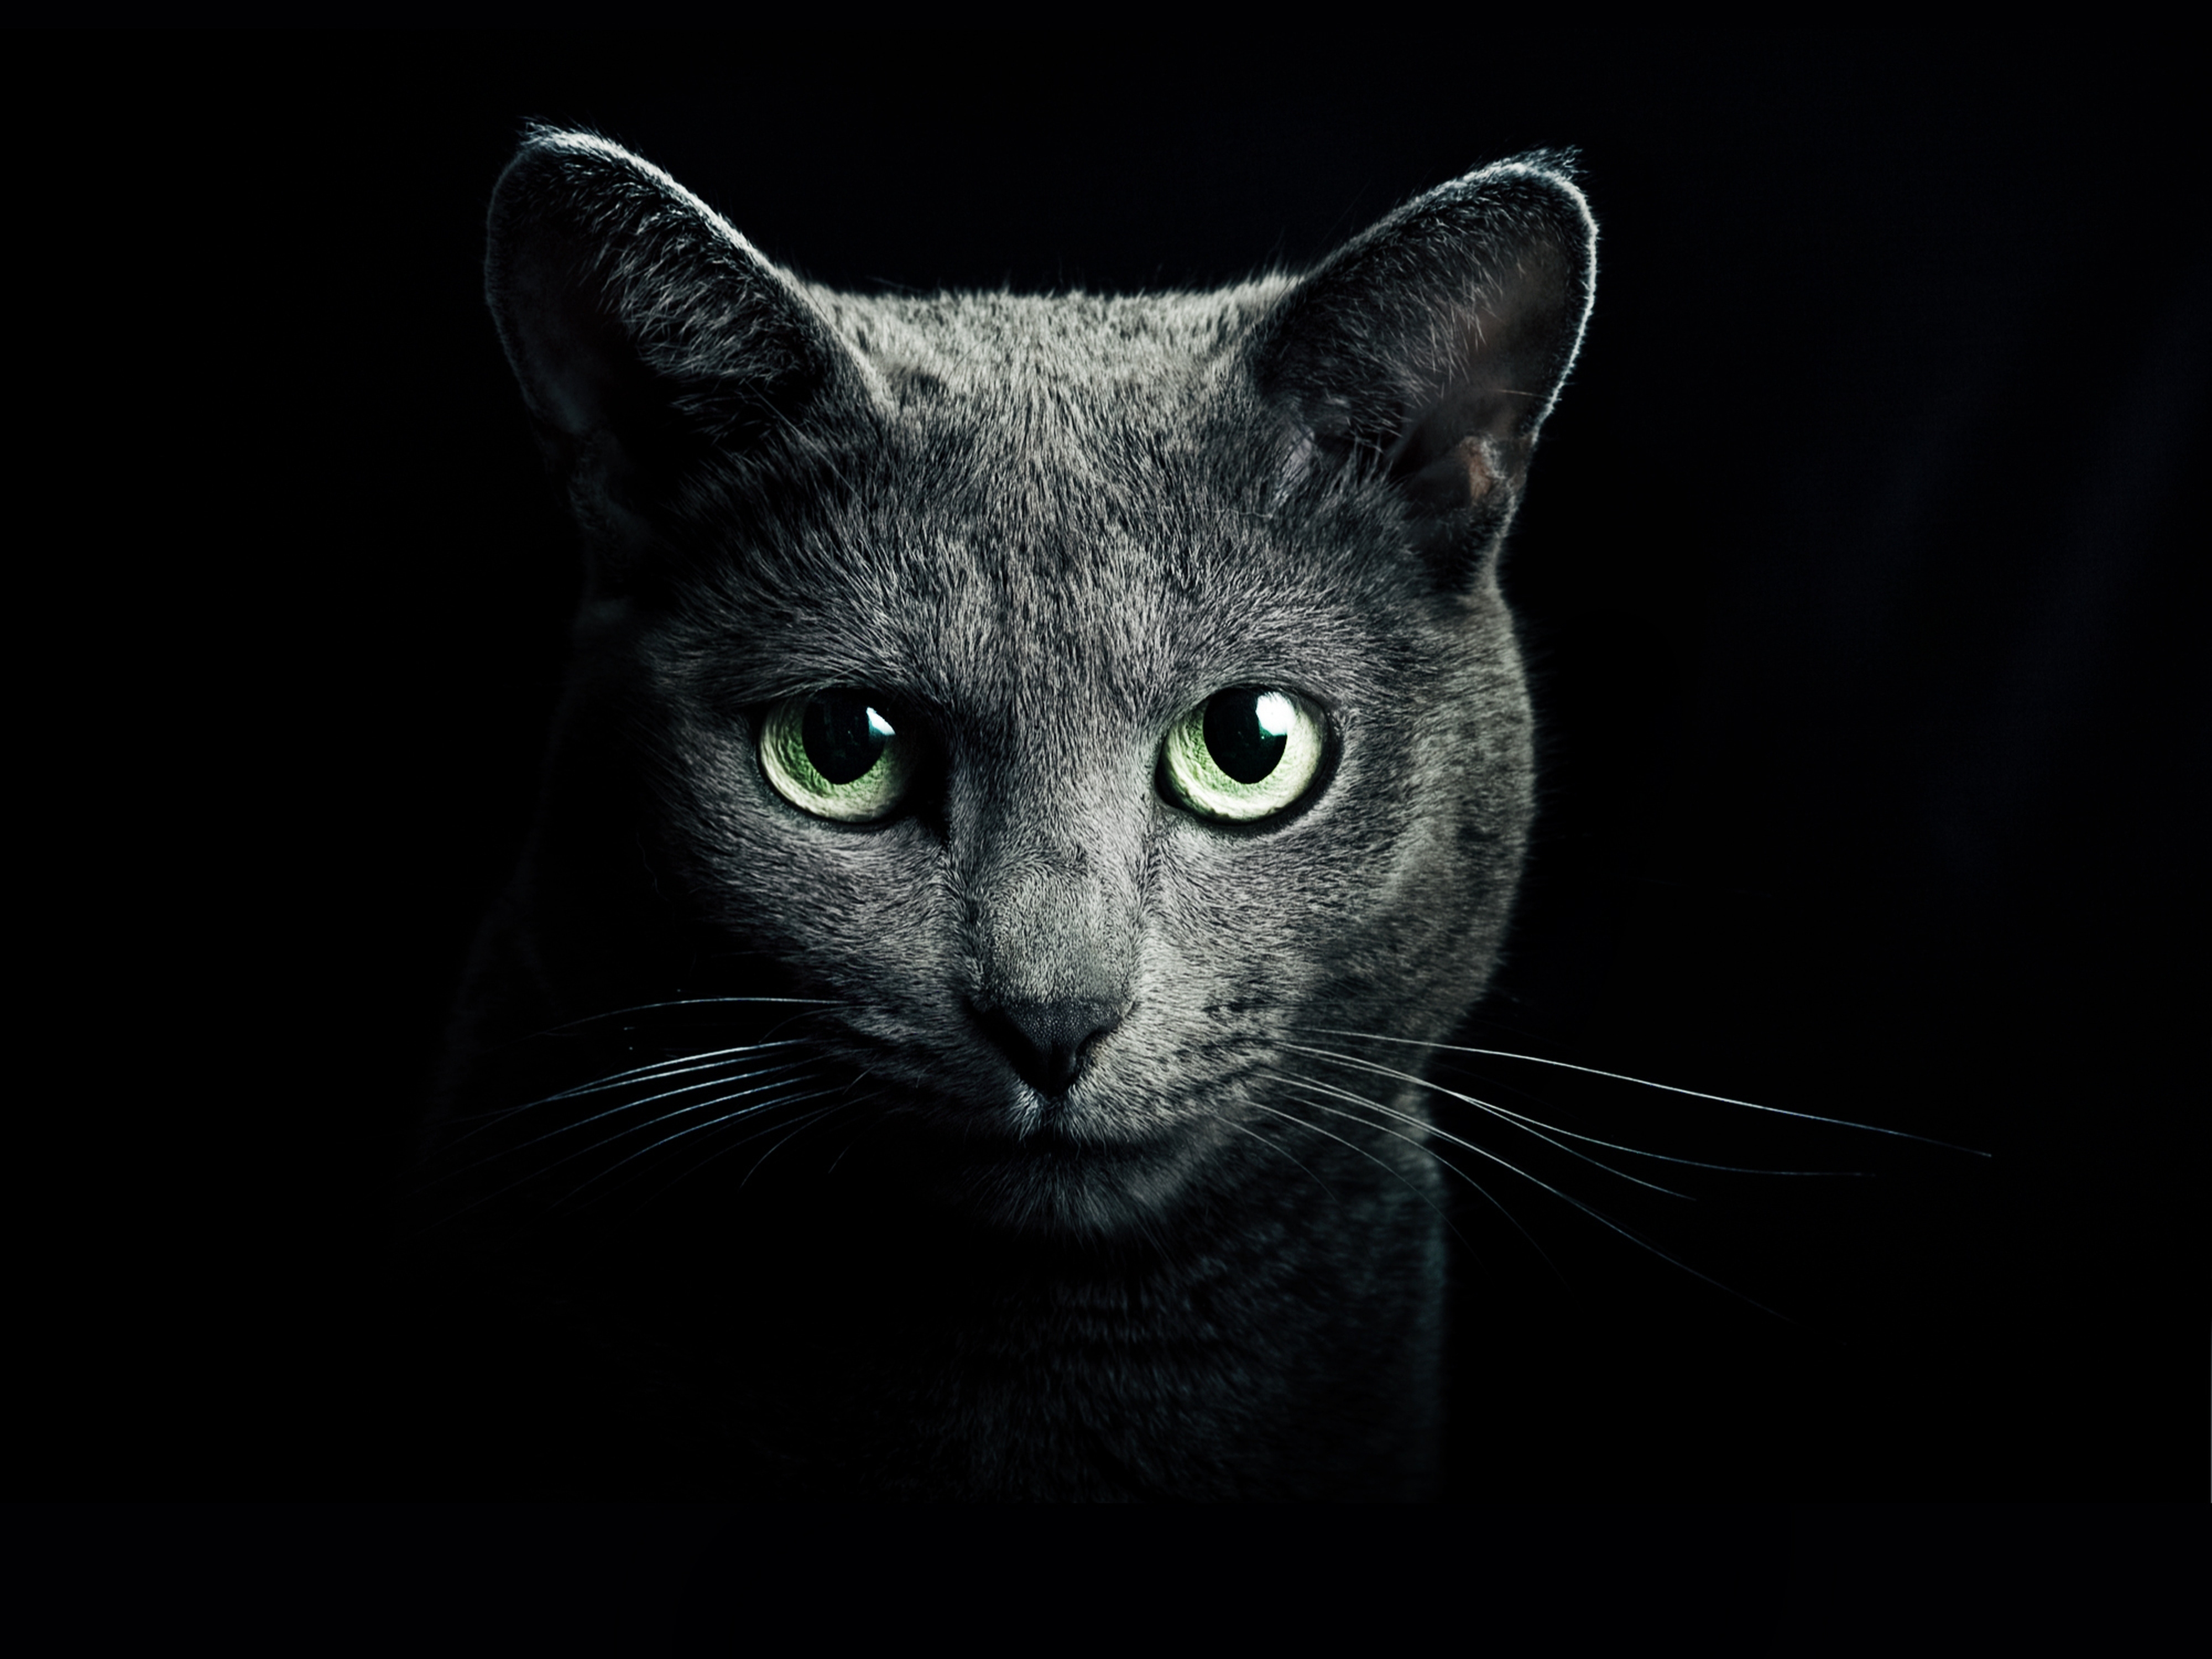 292679 descargar imagen animales, gato, cabeza, gatos: fondos de pantalla y protectores de pantalla gratis